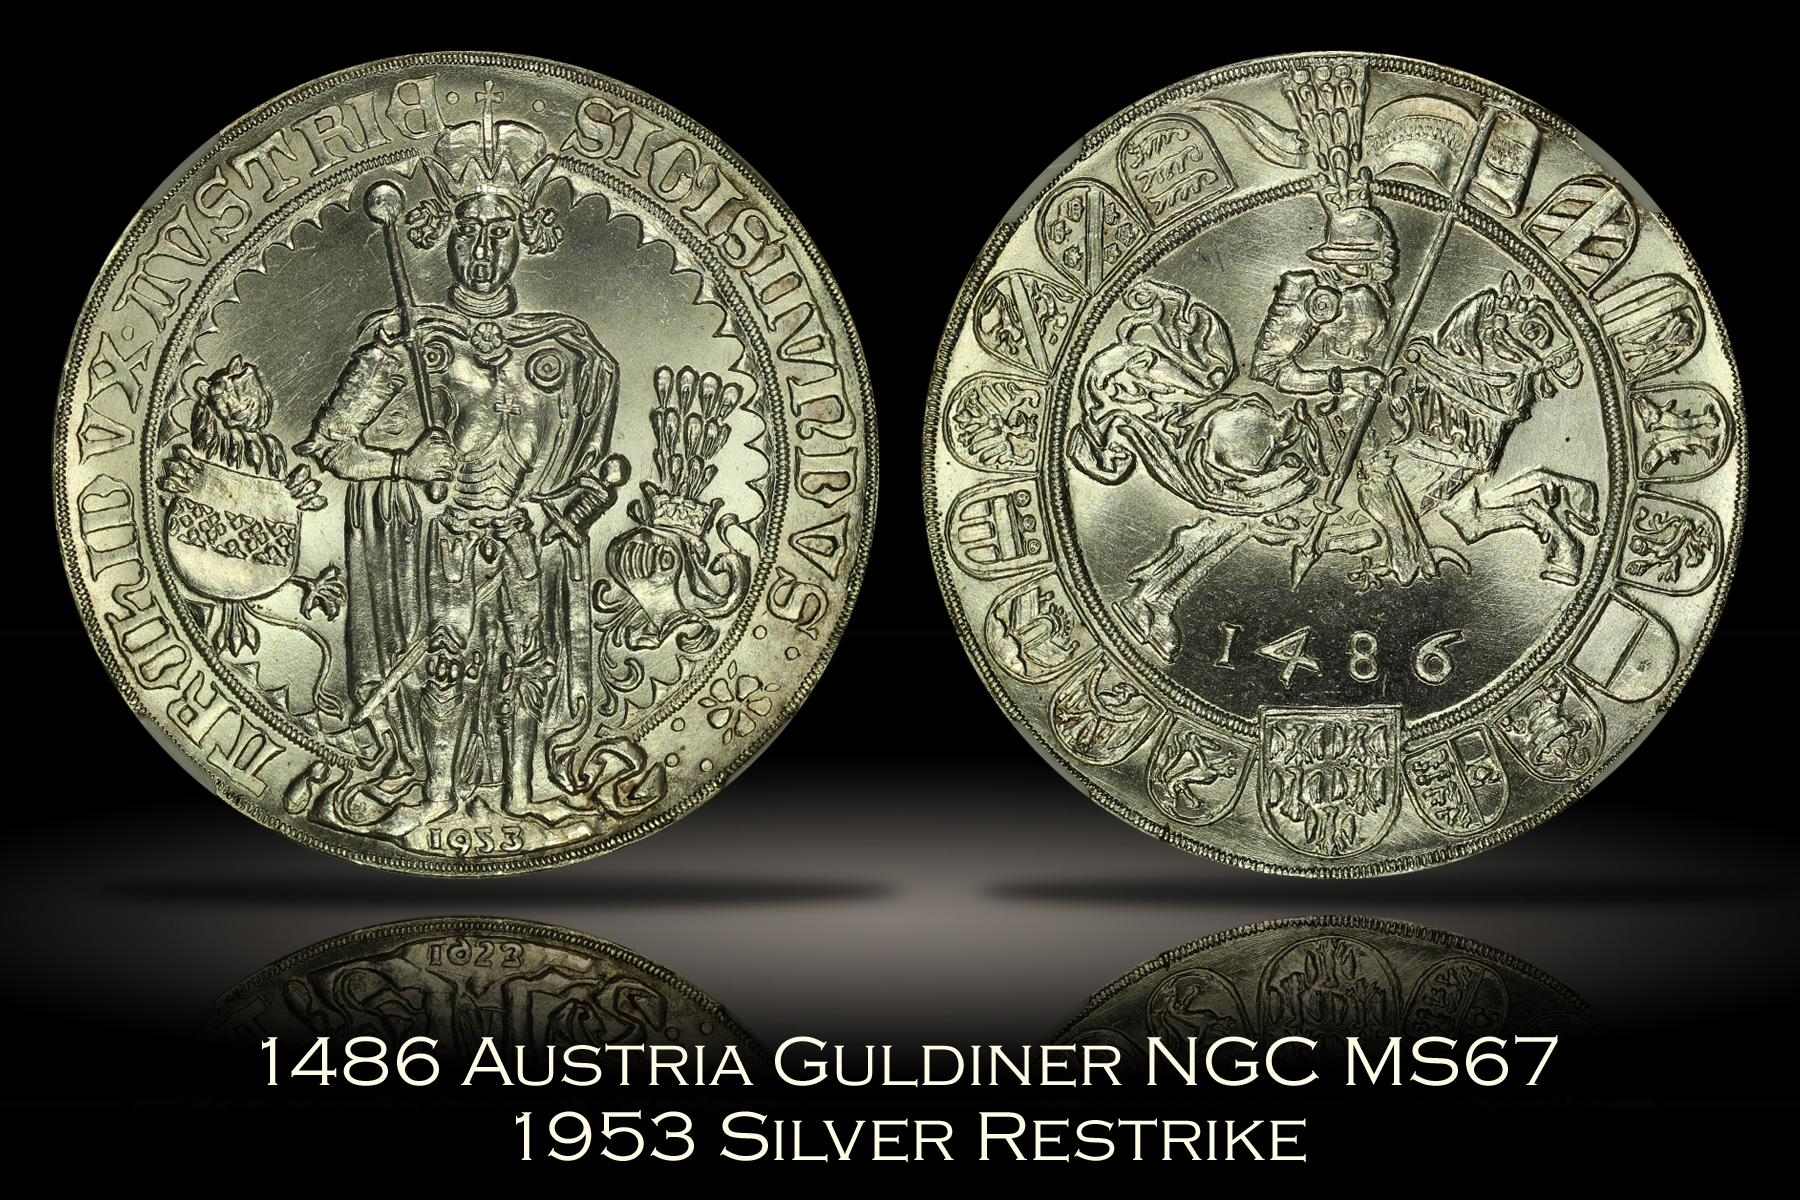 1486 Austria Guldiner NGC MS67 1953 Restrike